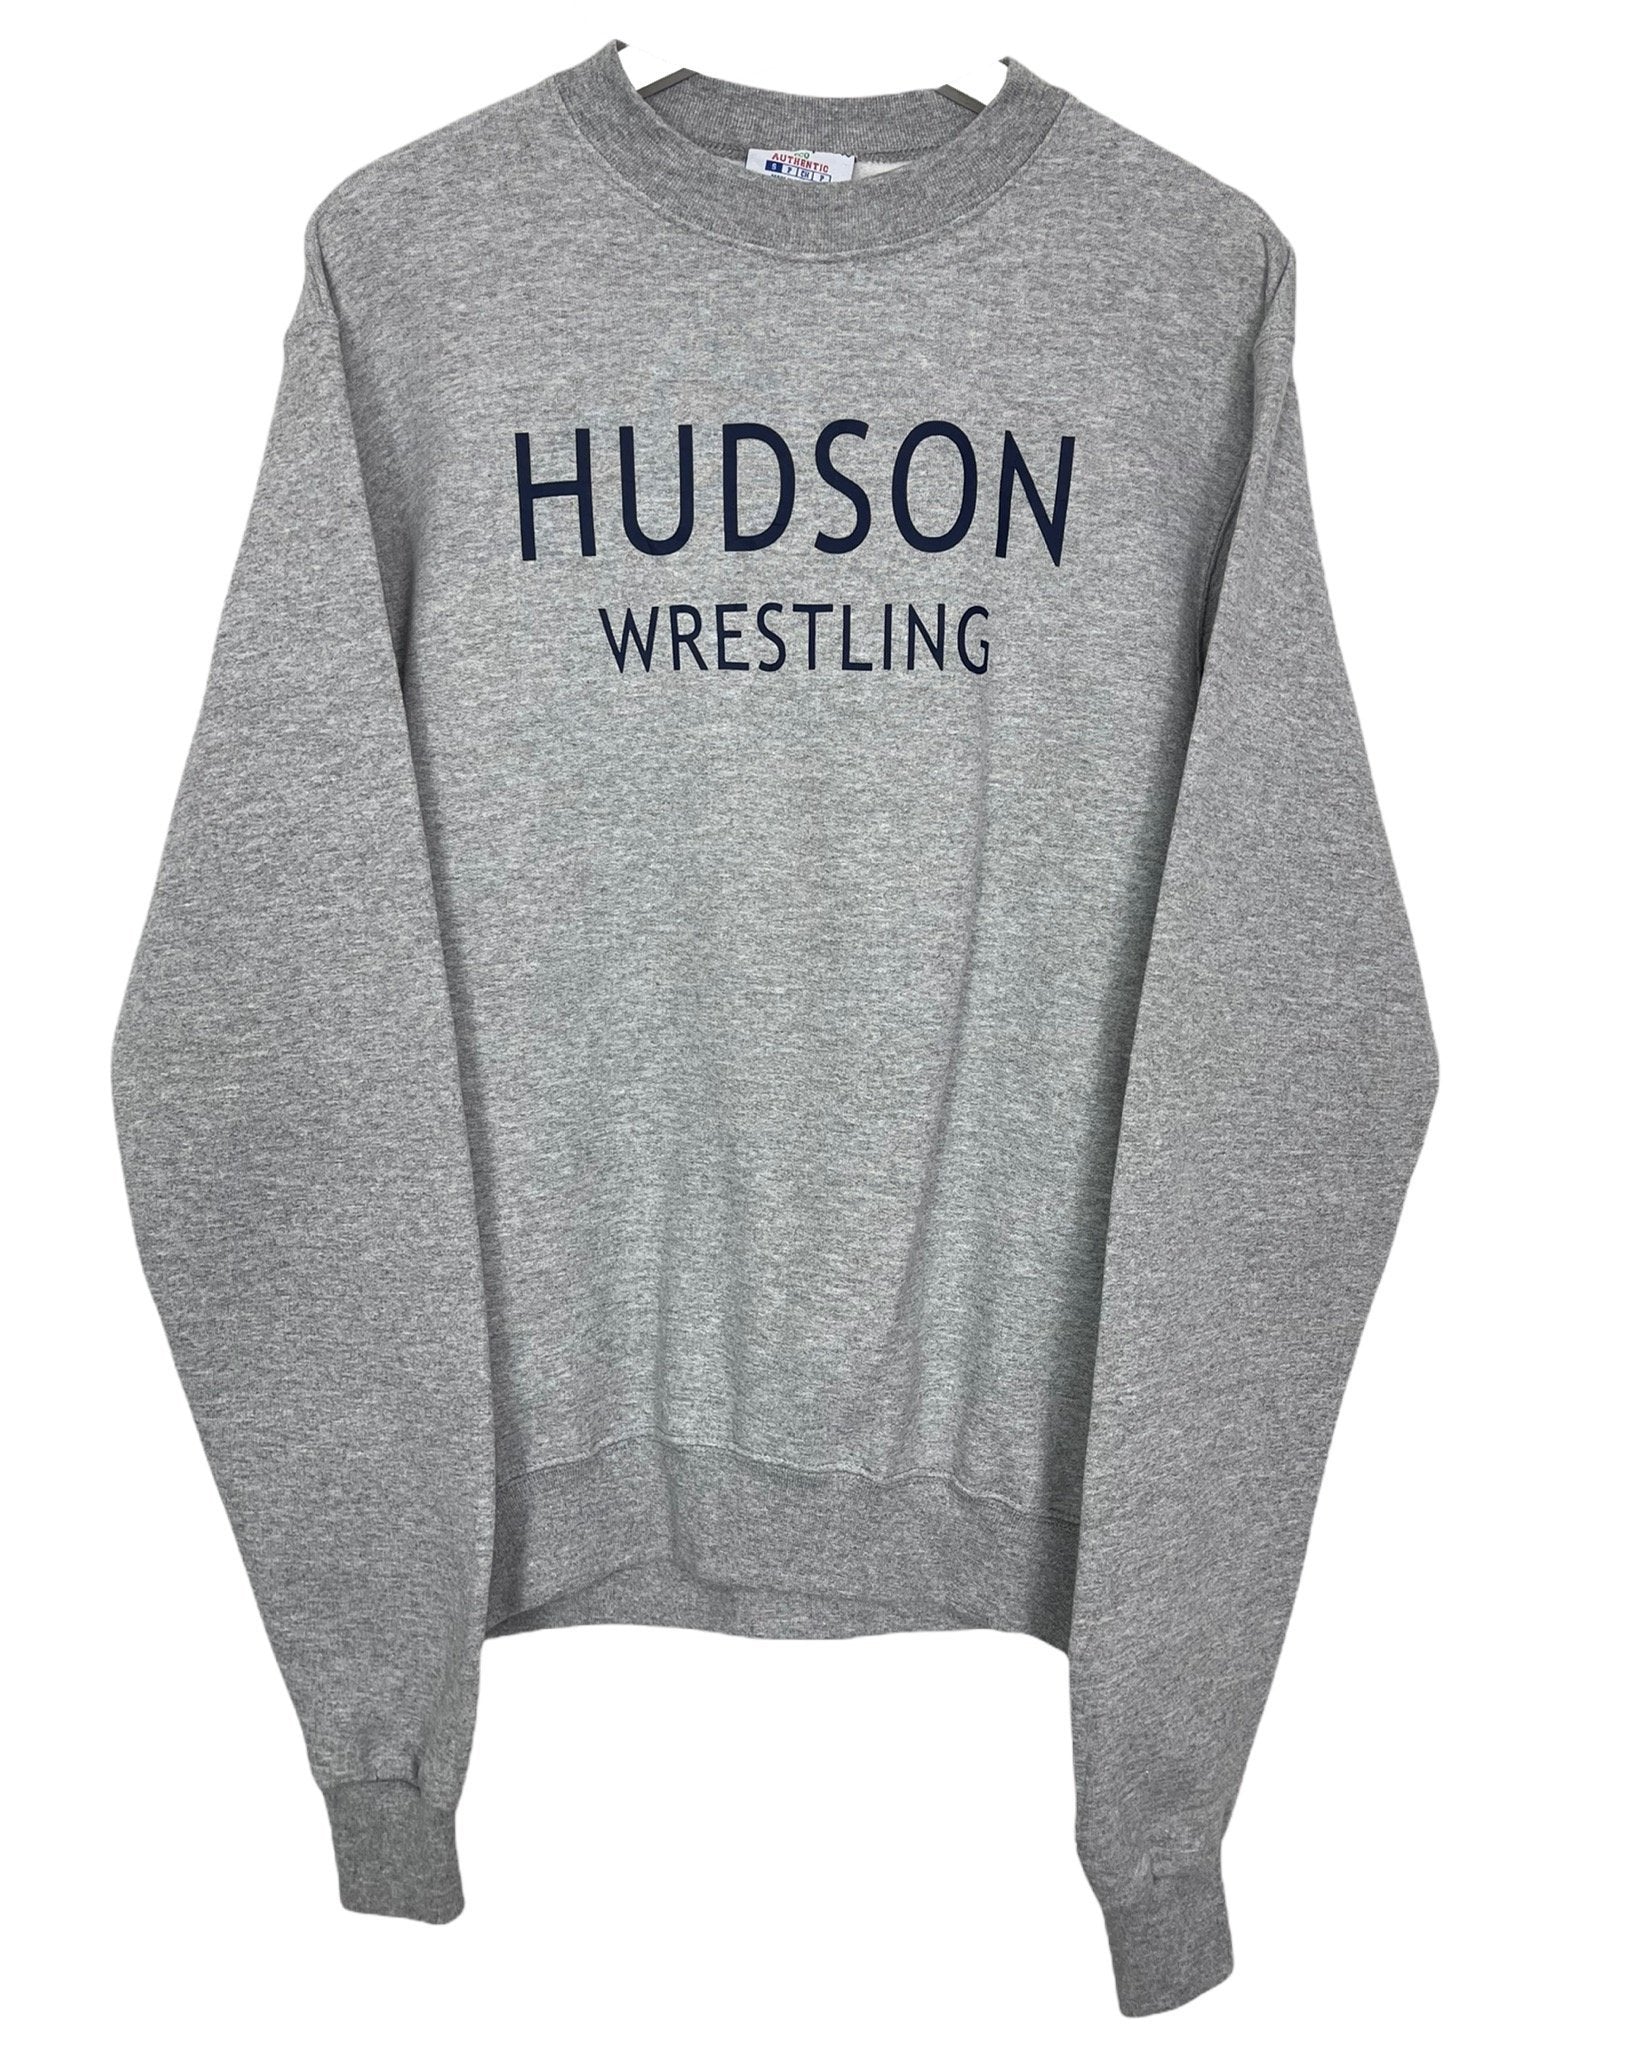  Sweatshirt Champion Sweat - Hudson University - S - PLOMOSTORE